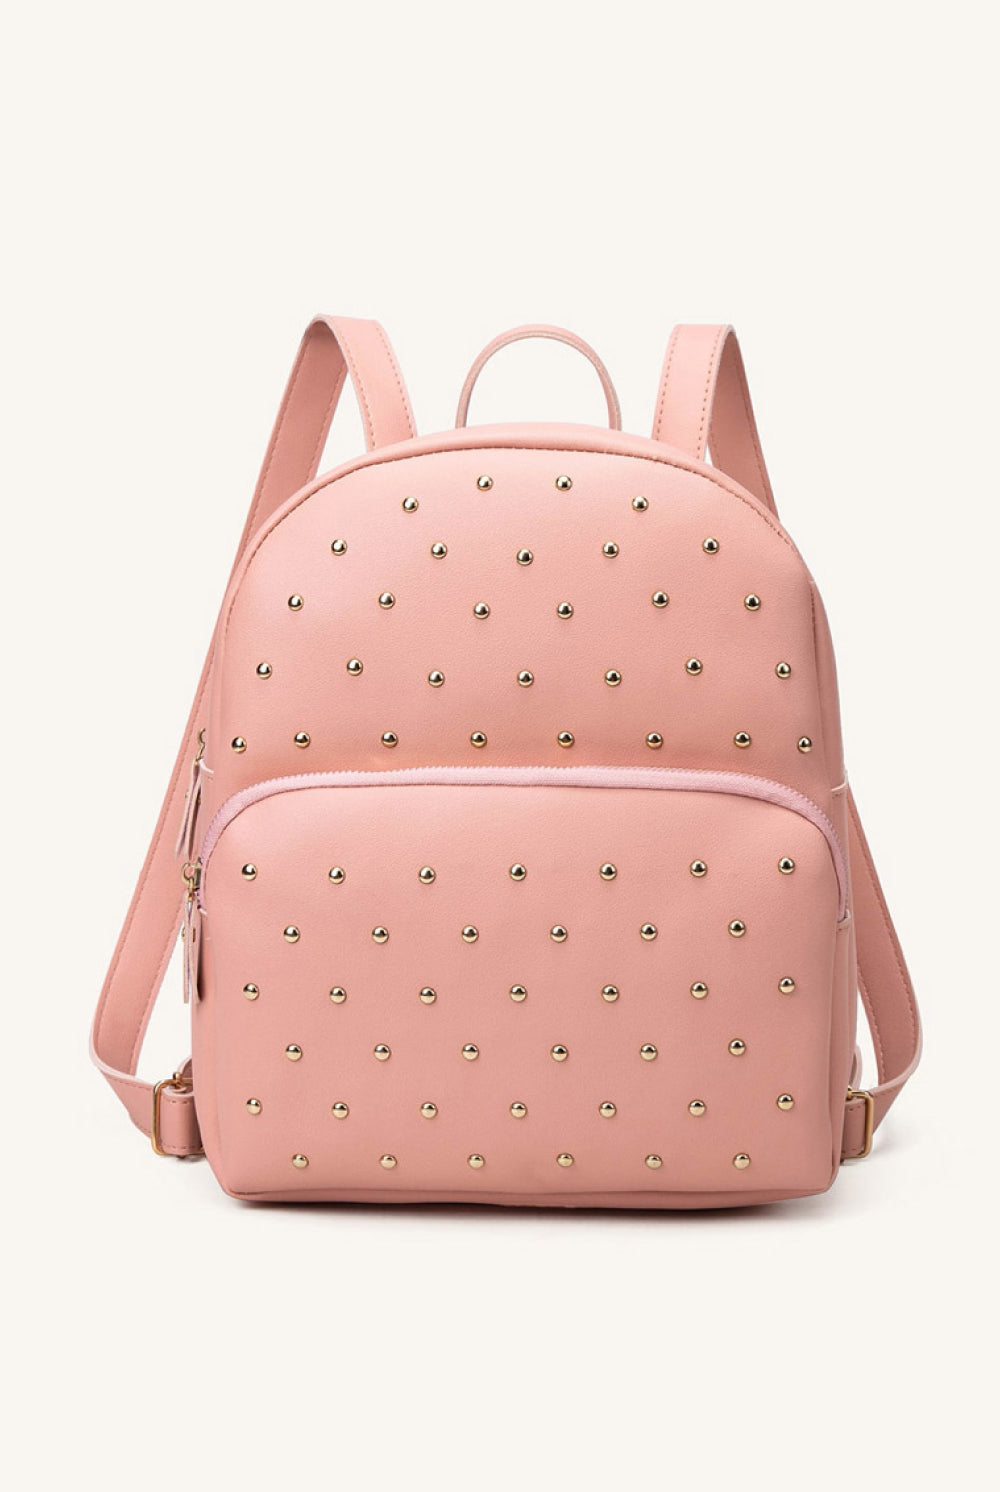 Seashell Studded PU Leather Backpack Handbags